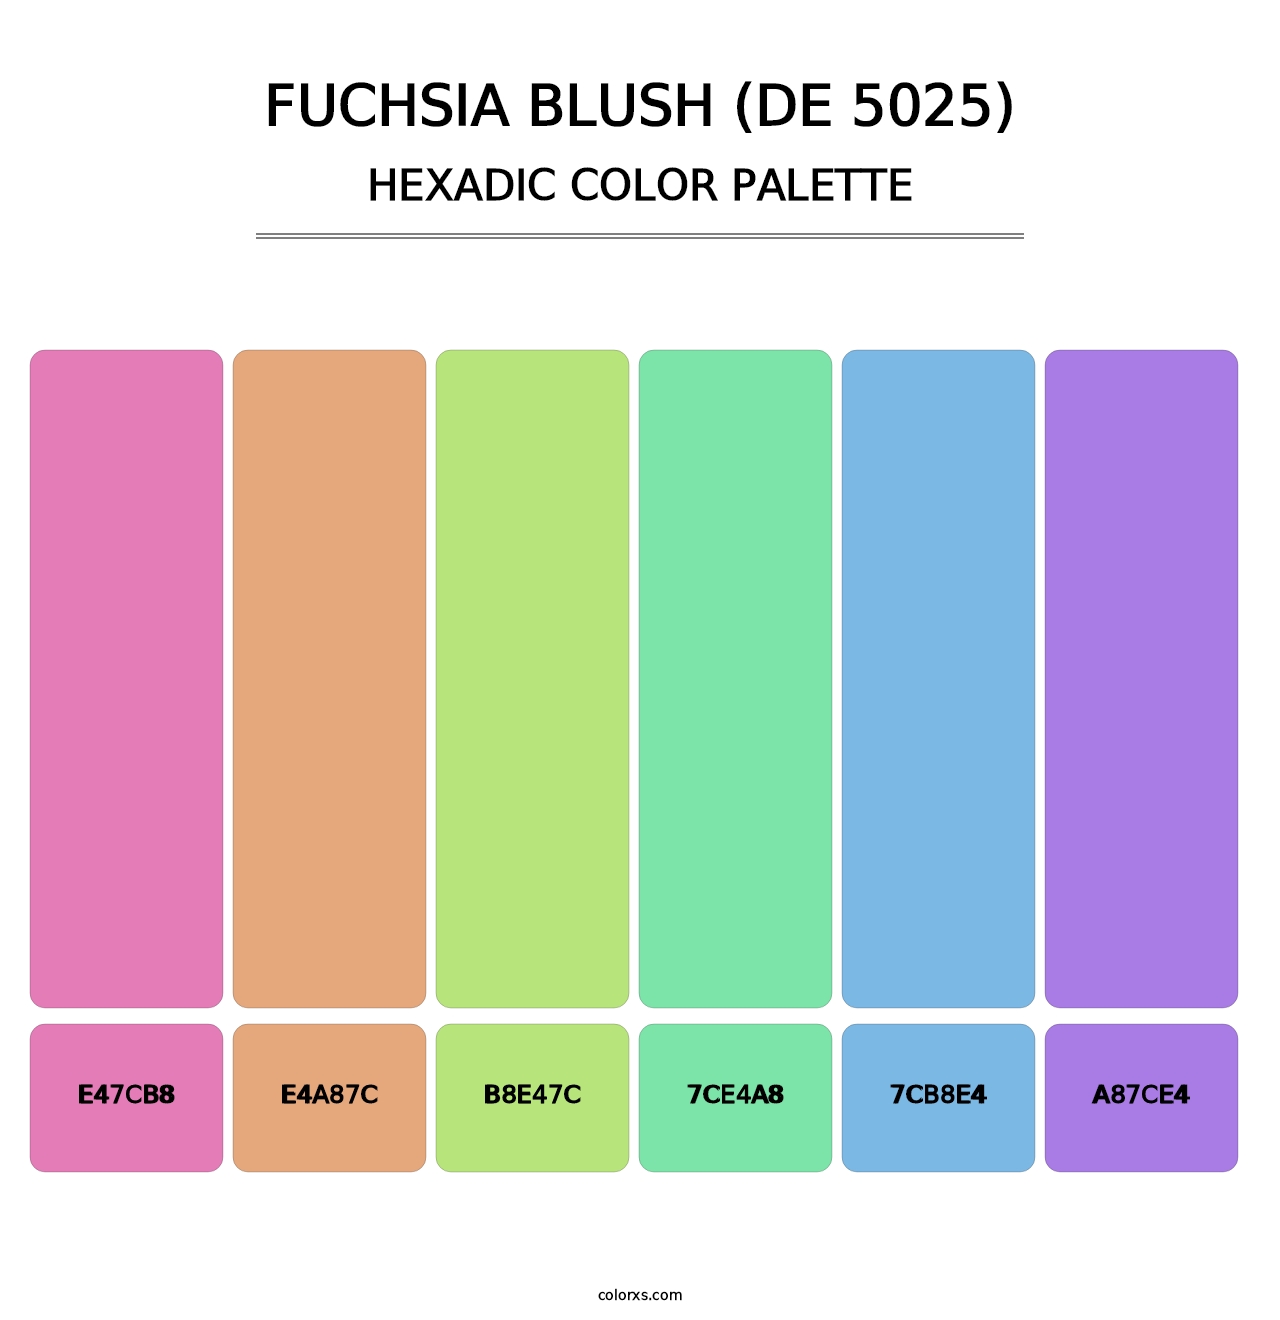 Fuchsia Blush (DE 5025) - Hexadic Color Palette